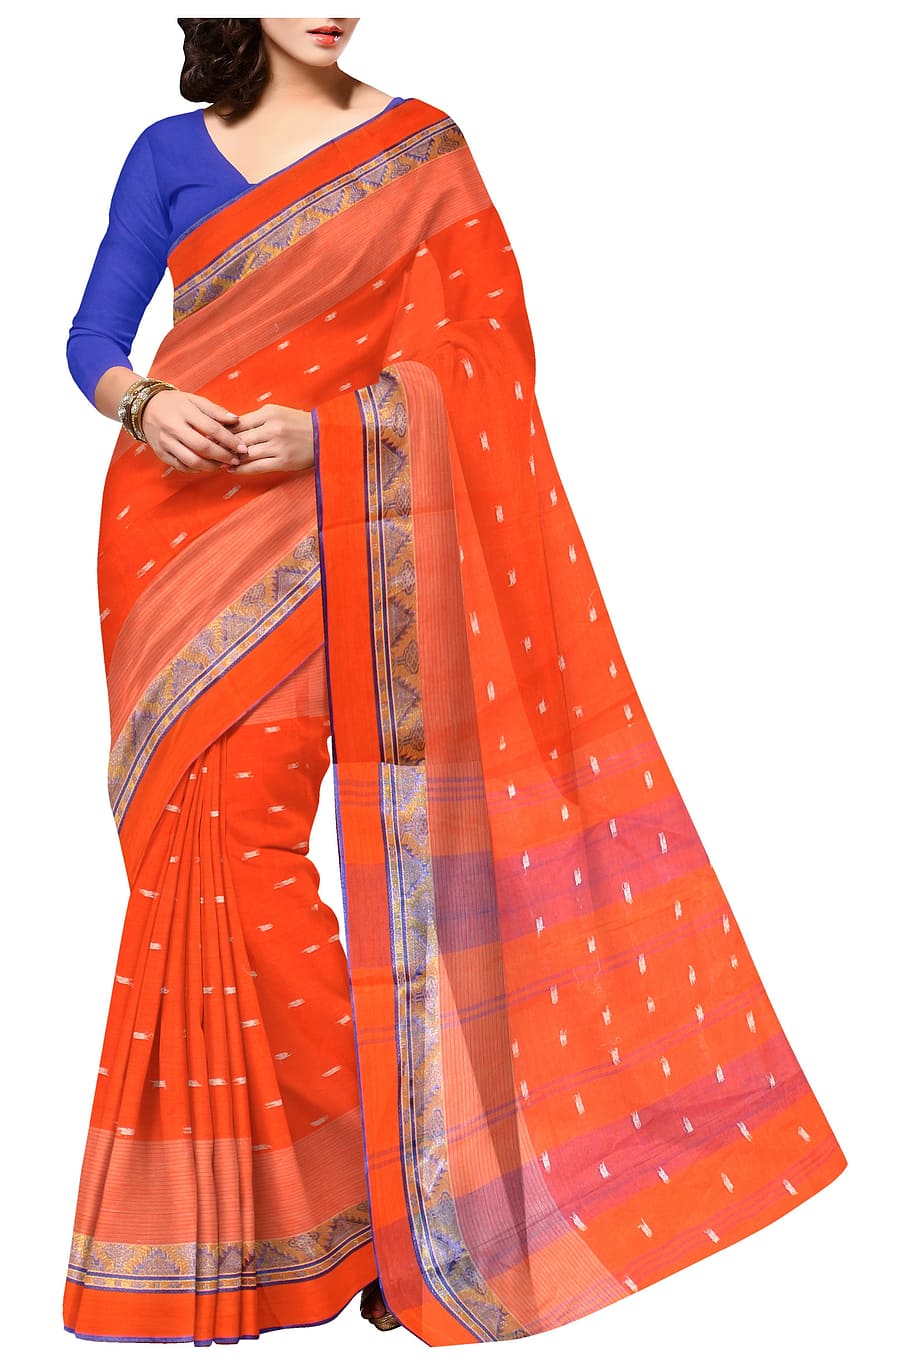 woman, orange, blue, saree dress, Saree, Indian, Ethnic, Clothing, Fashion, silk